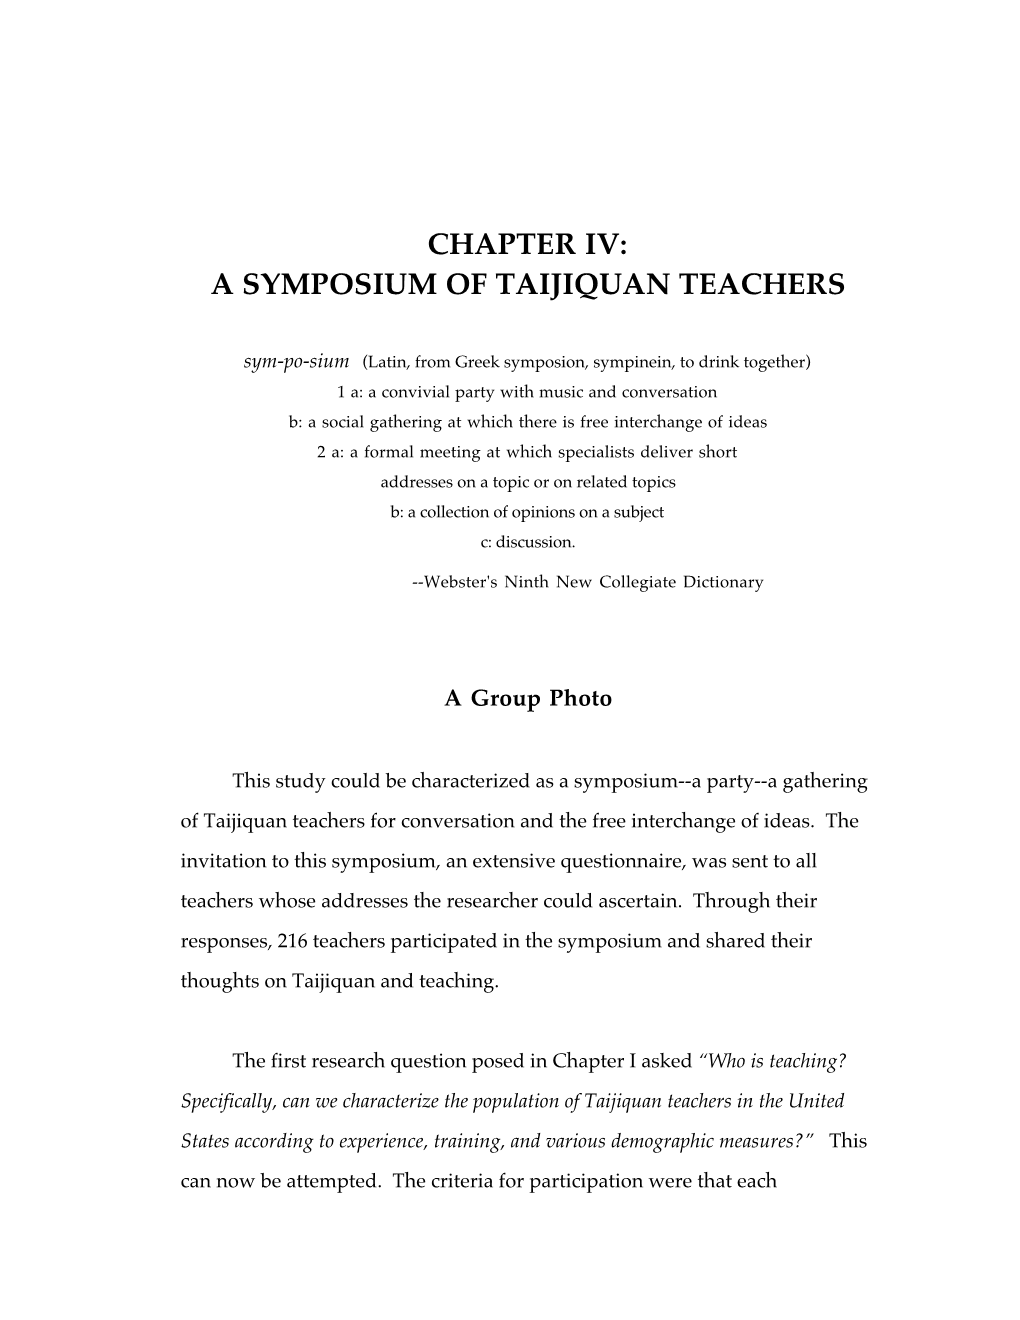 Chapter Iv: a Symposium of Taijiquan Teachers